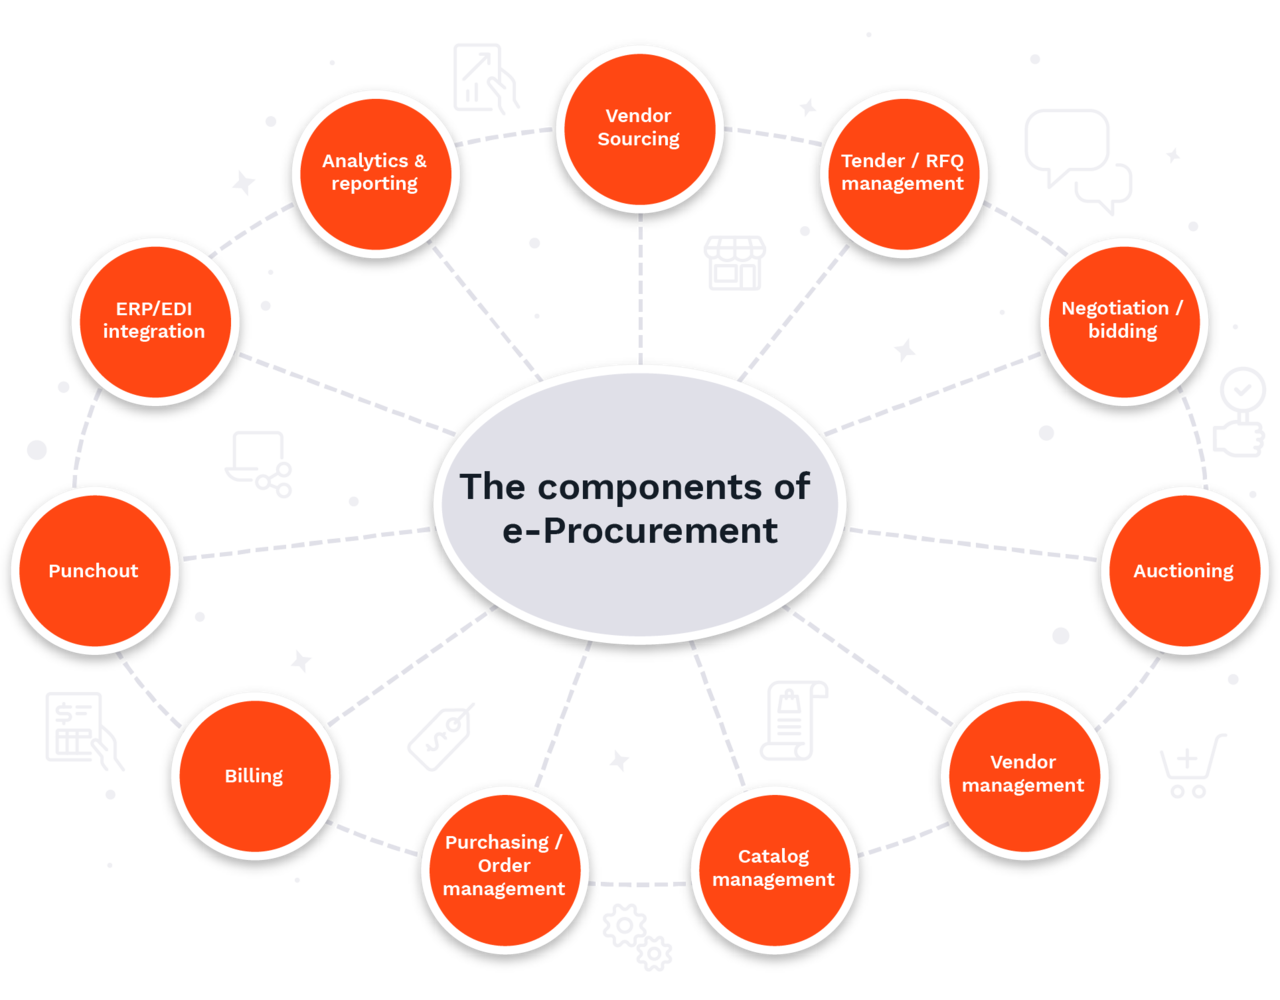 The components of e-Procurement